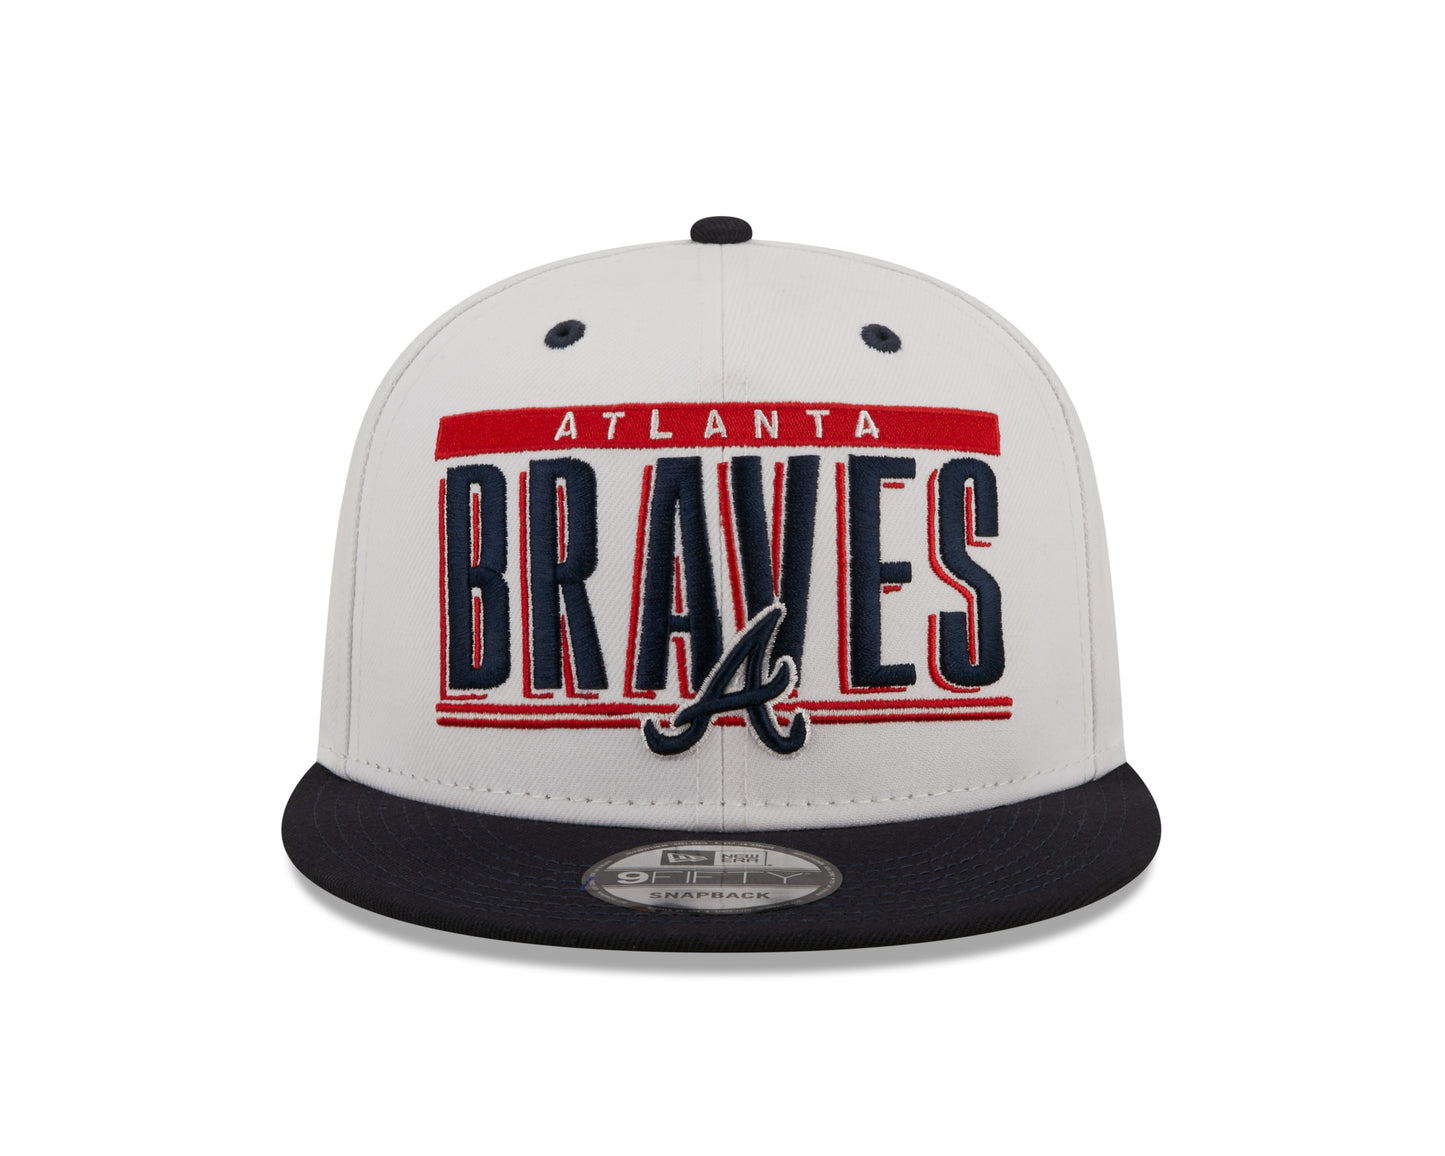 Atlanta Braves Retro Title 9fifty Snapback Hat